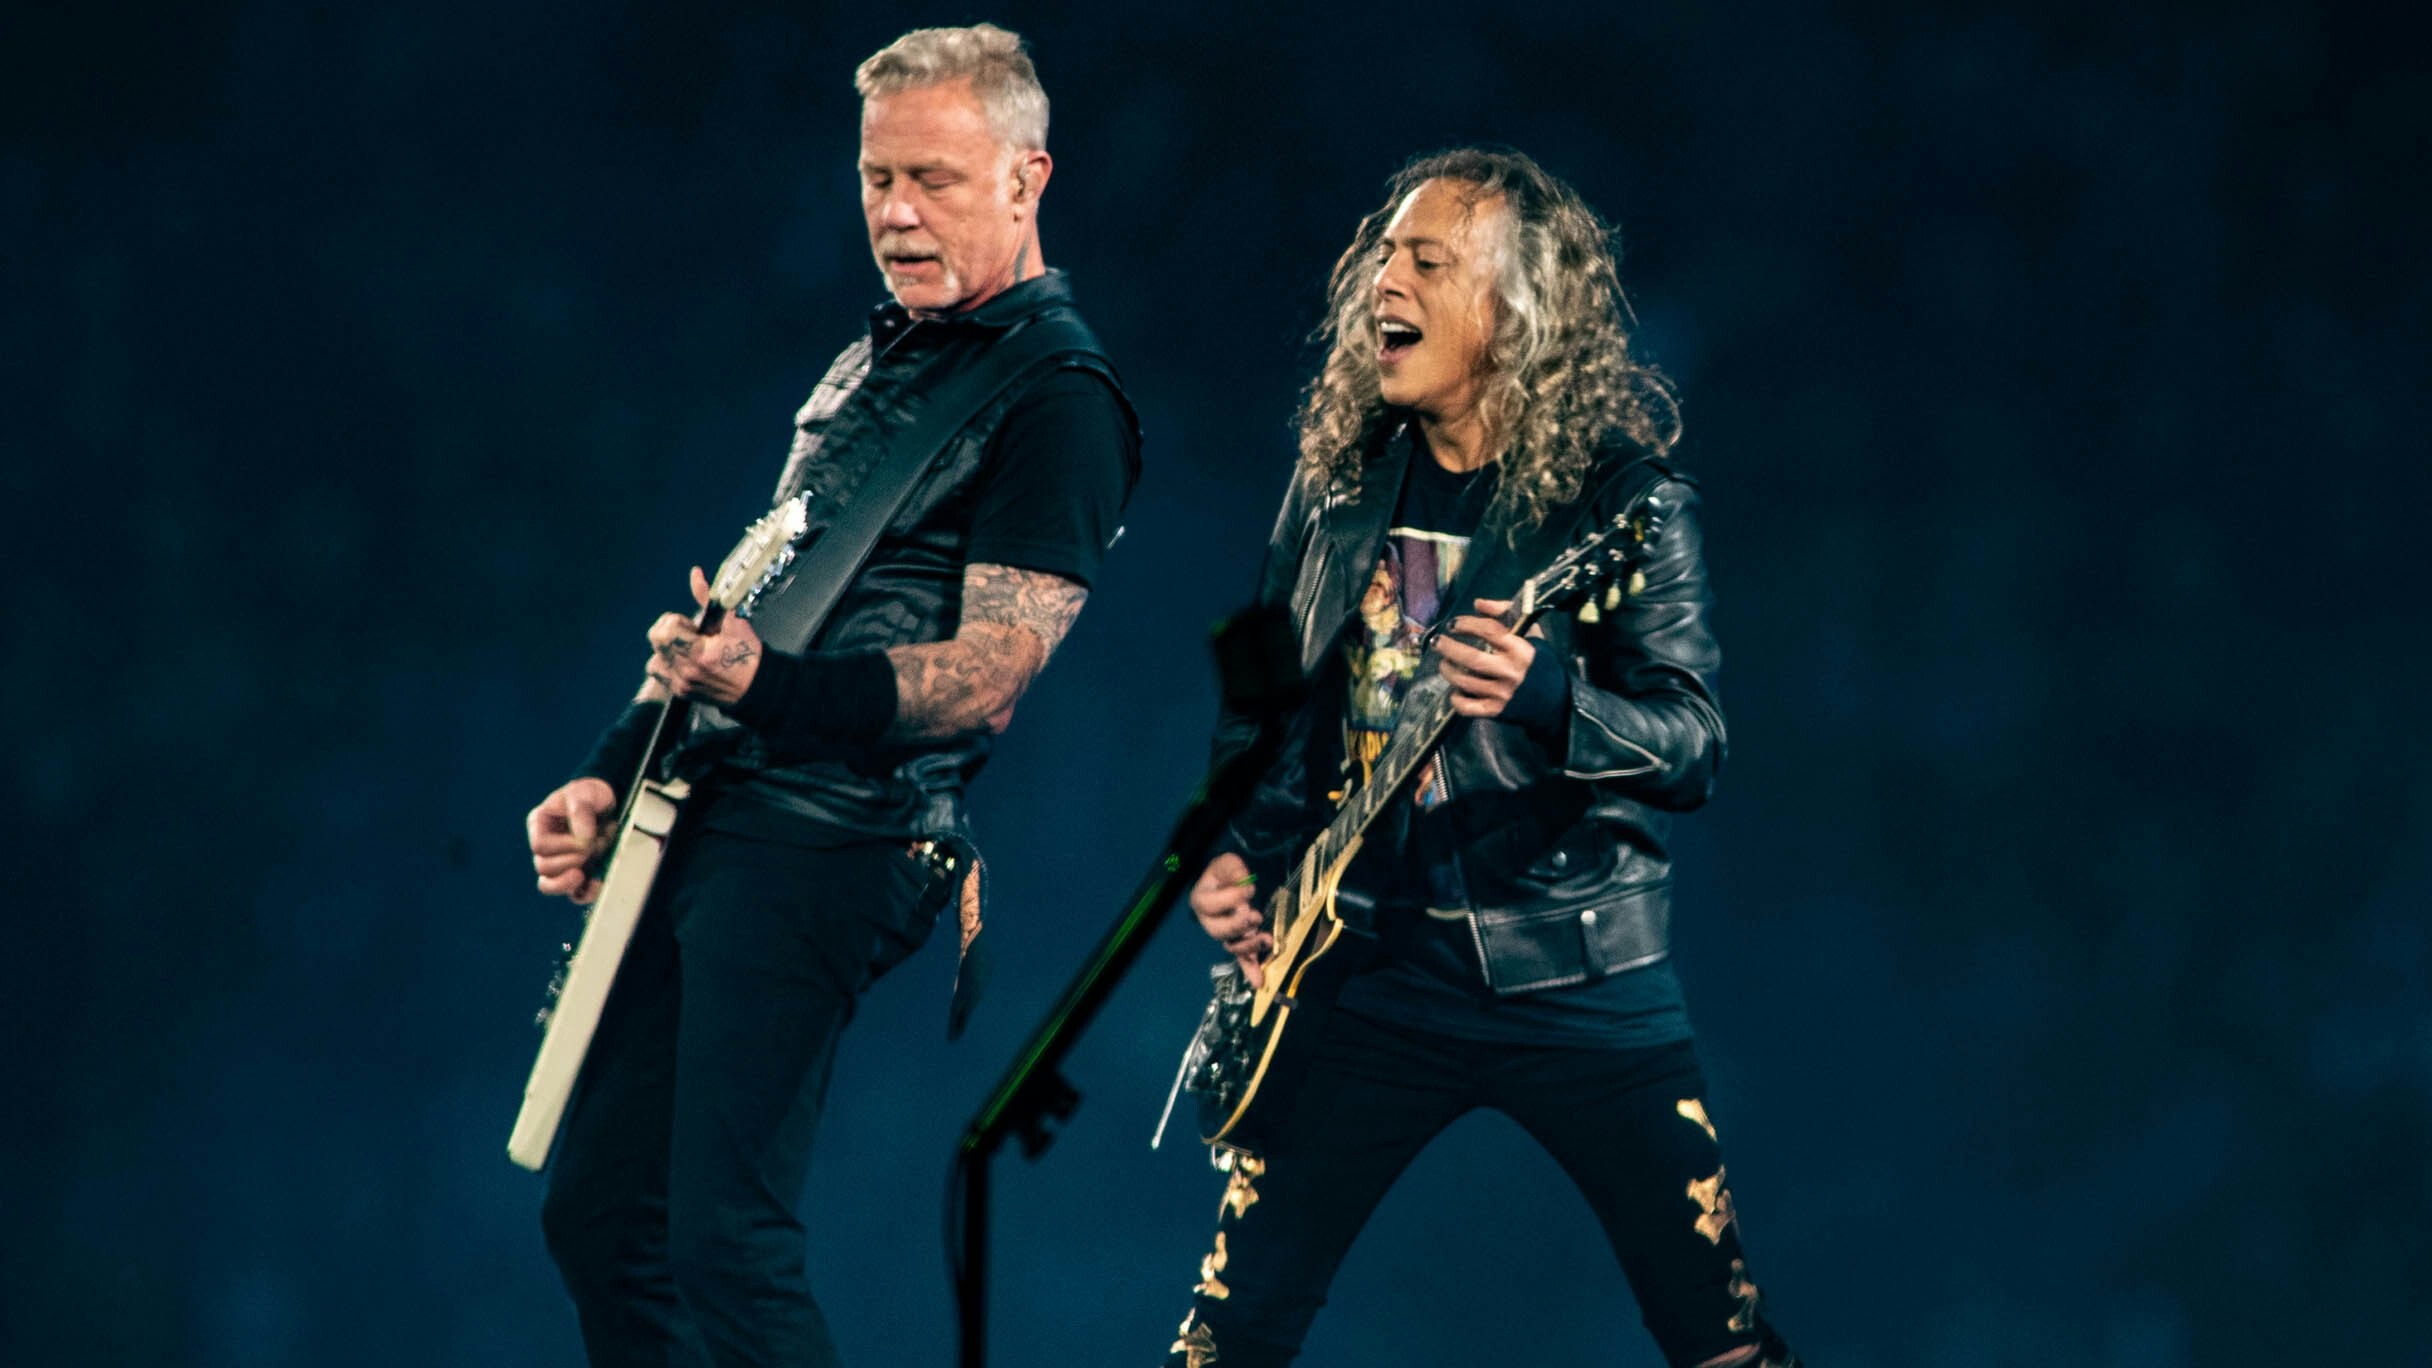 James Hetfield and Kirk Hammett of Metallica perform on stage at Johan Cruijff Arena on April 29, 2023 in Amsterdam, Netherlands.